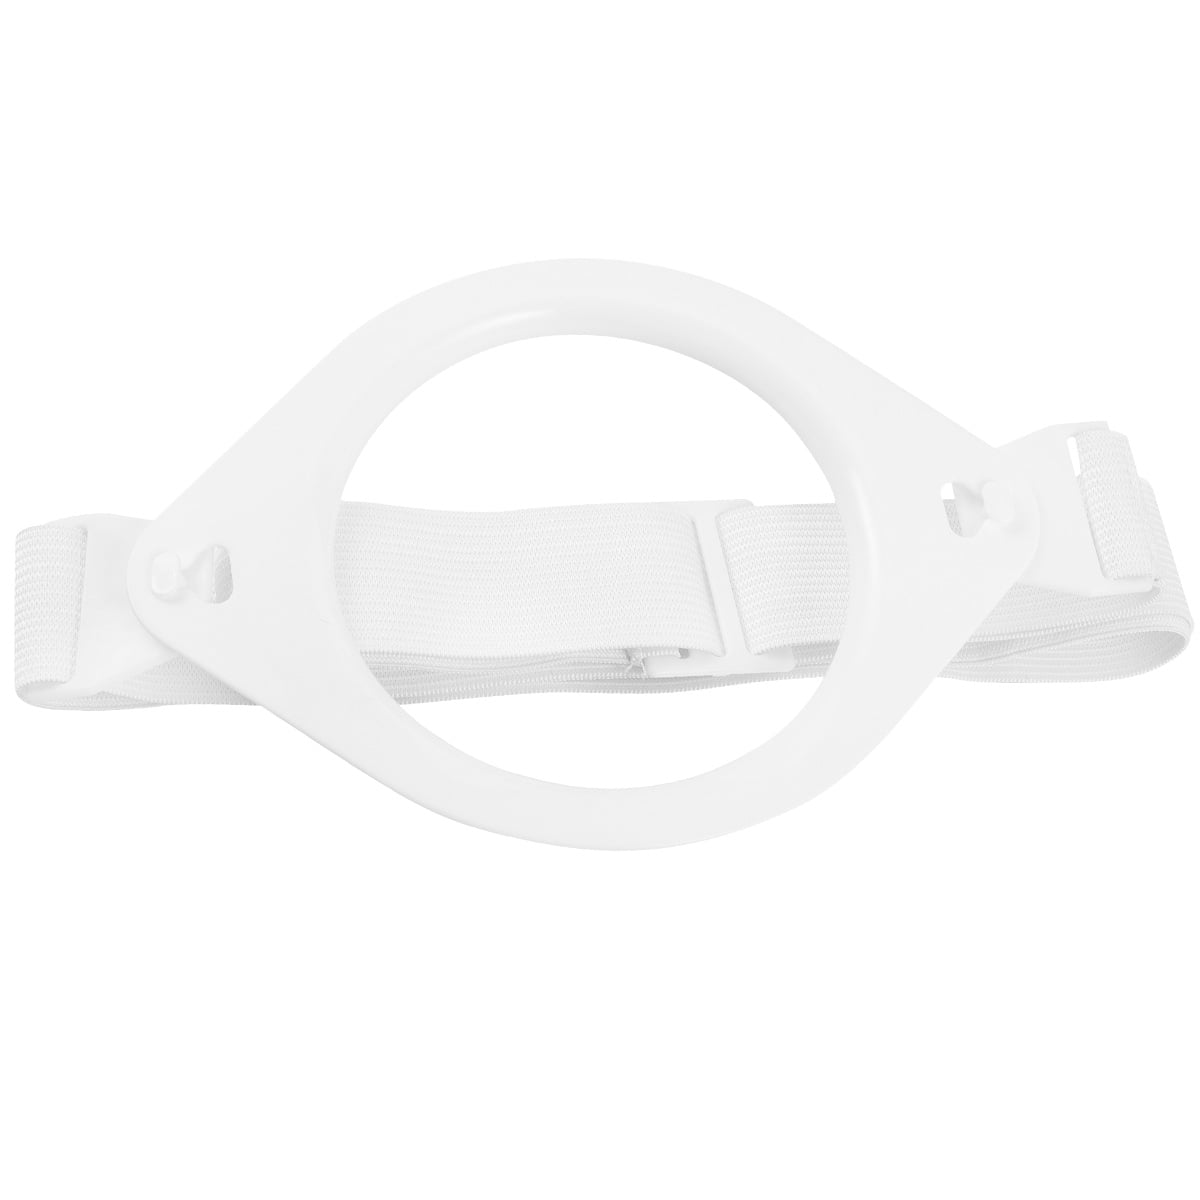 Lightweight Ostomy Belt, Portable Length Adjustable Strap Ostomy Hernia  Belt, for Post-Operative Care After Colostomy Ileostomy Surgery. White